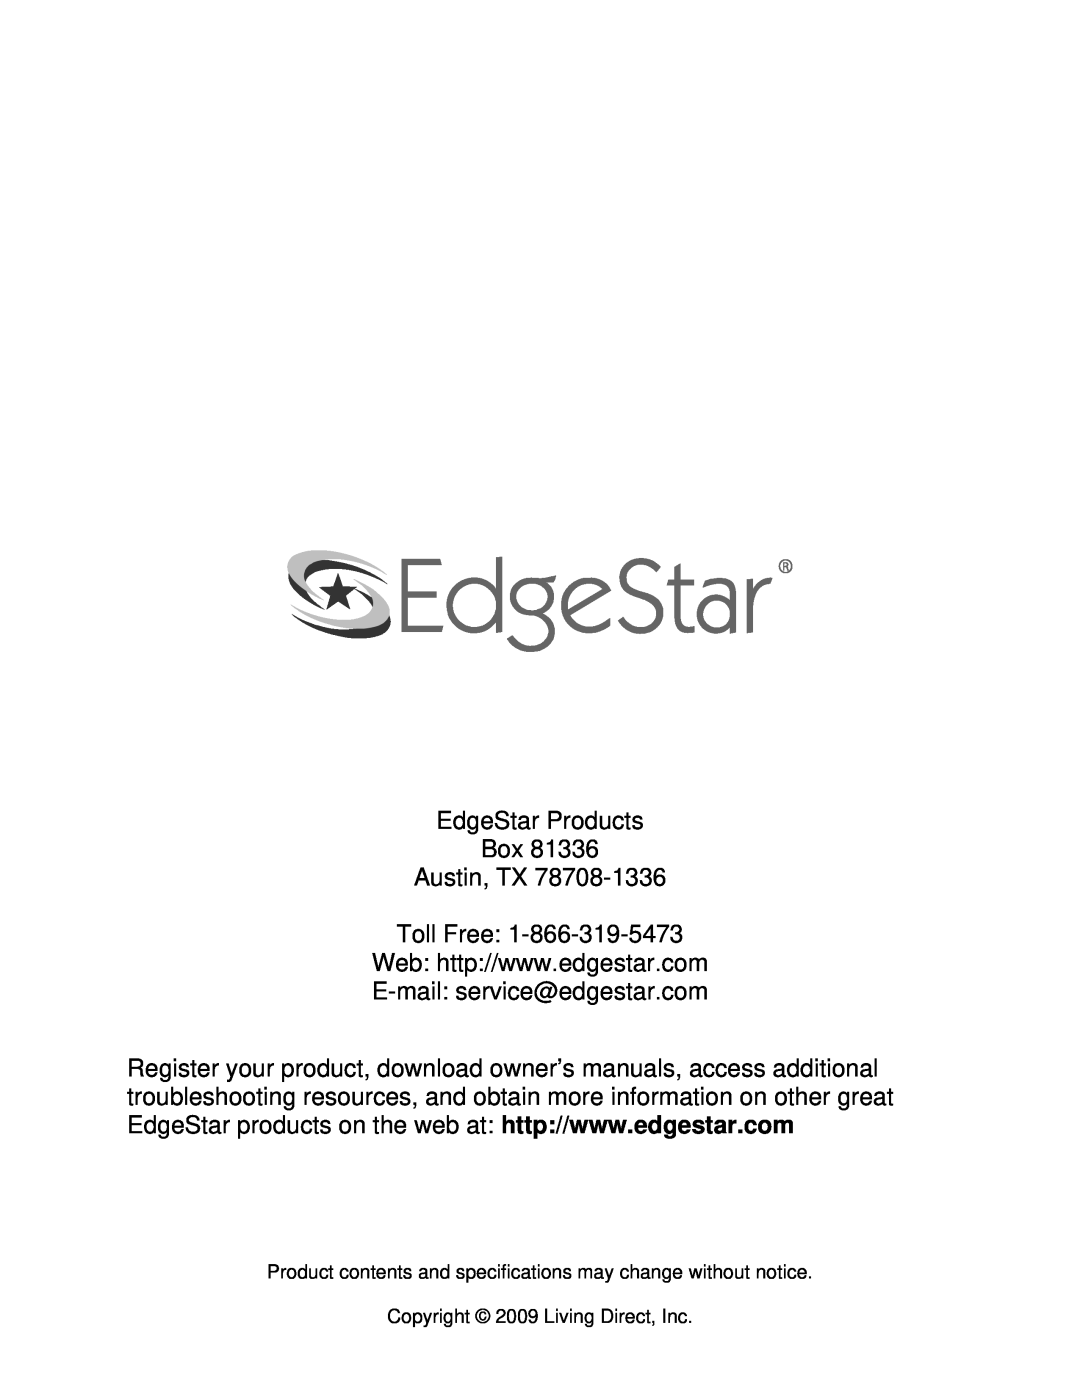 EdgeStar CWR265SZ owner manual EdgeStar Products Box Austin, TX Toll Free, E-mail service@edgestar.com 